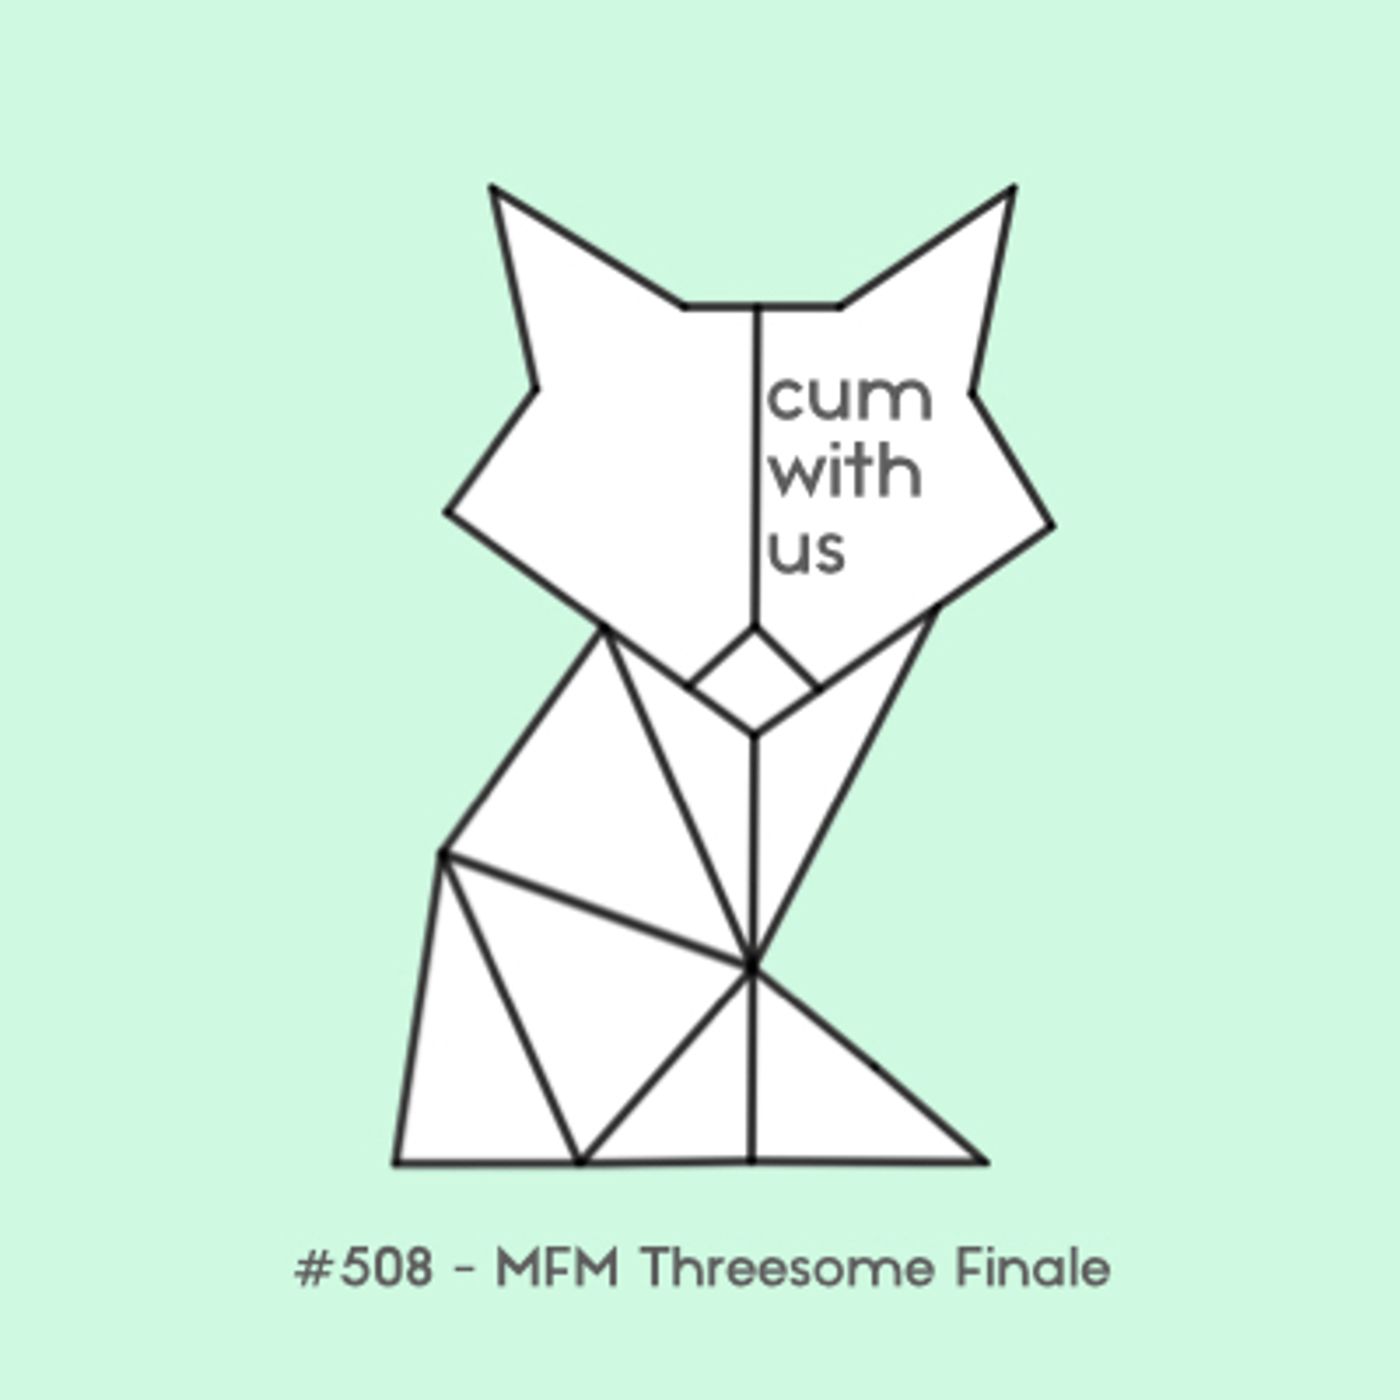 MFM Threesome - Erotic Audio for Women #508